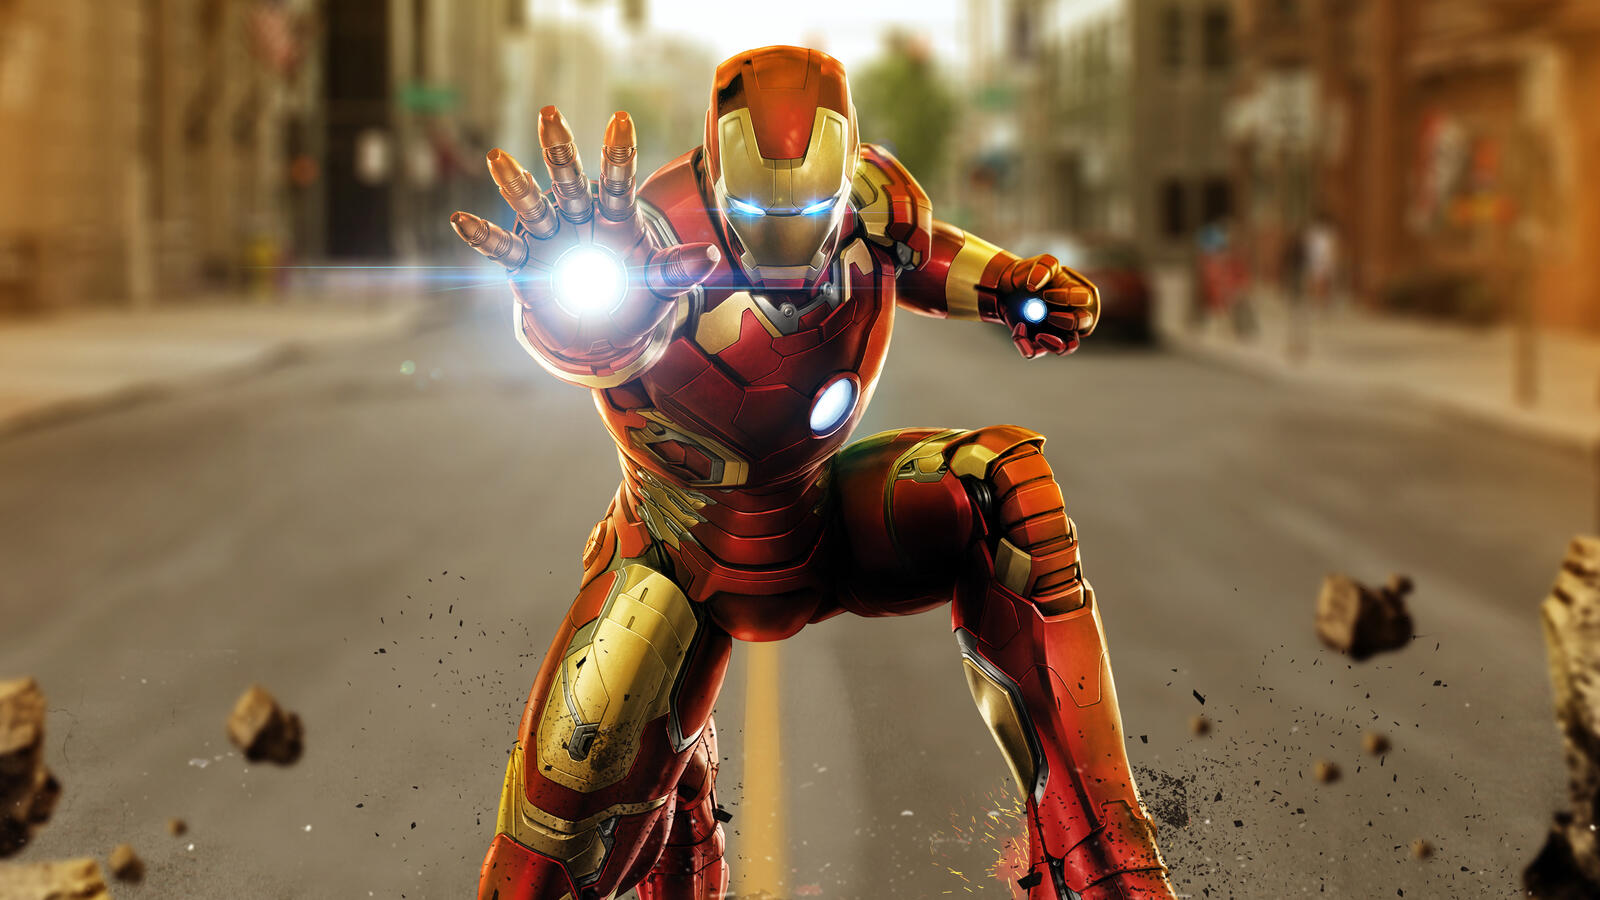 Wallpapers iron man avengers superheroes on the desktop